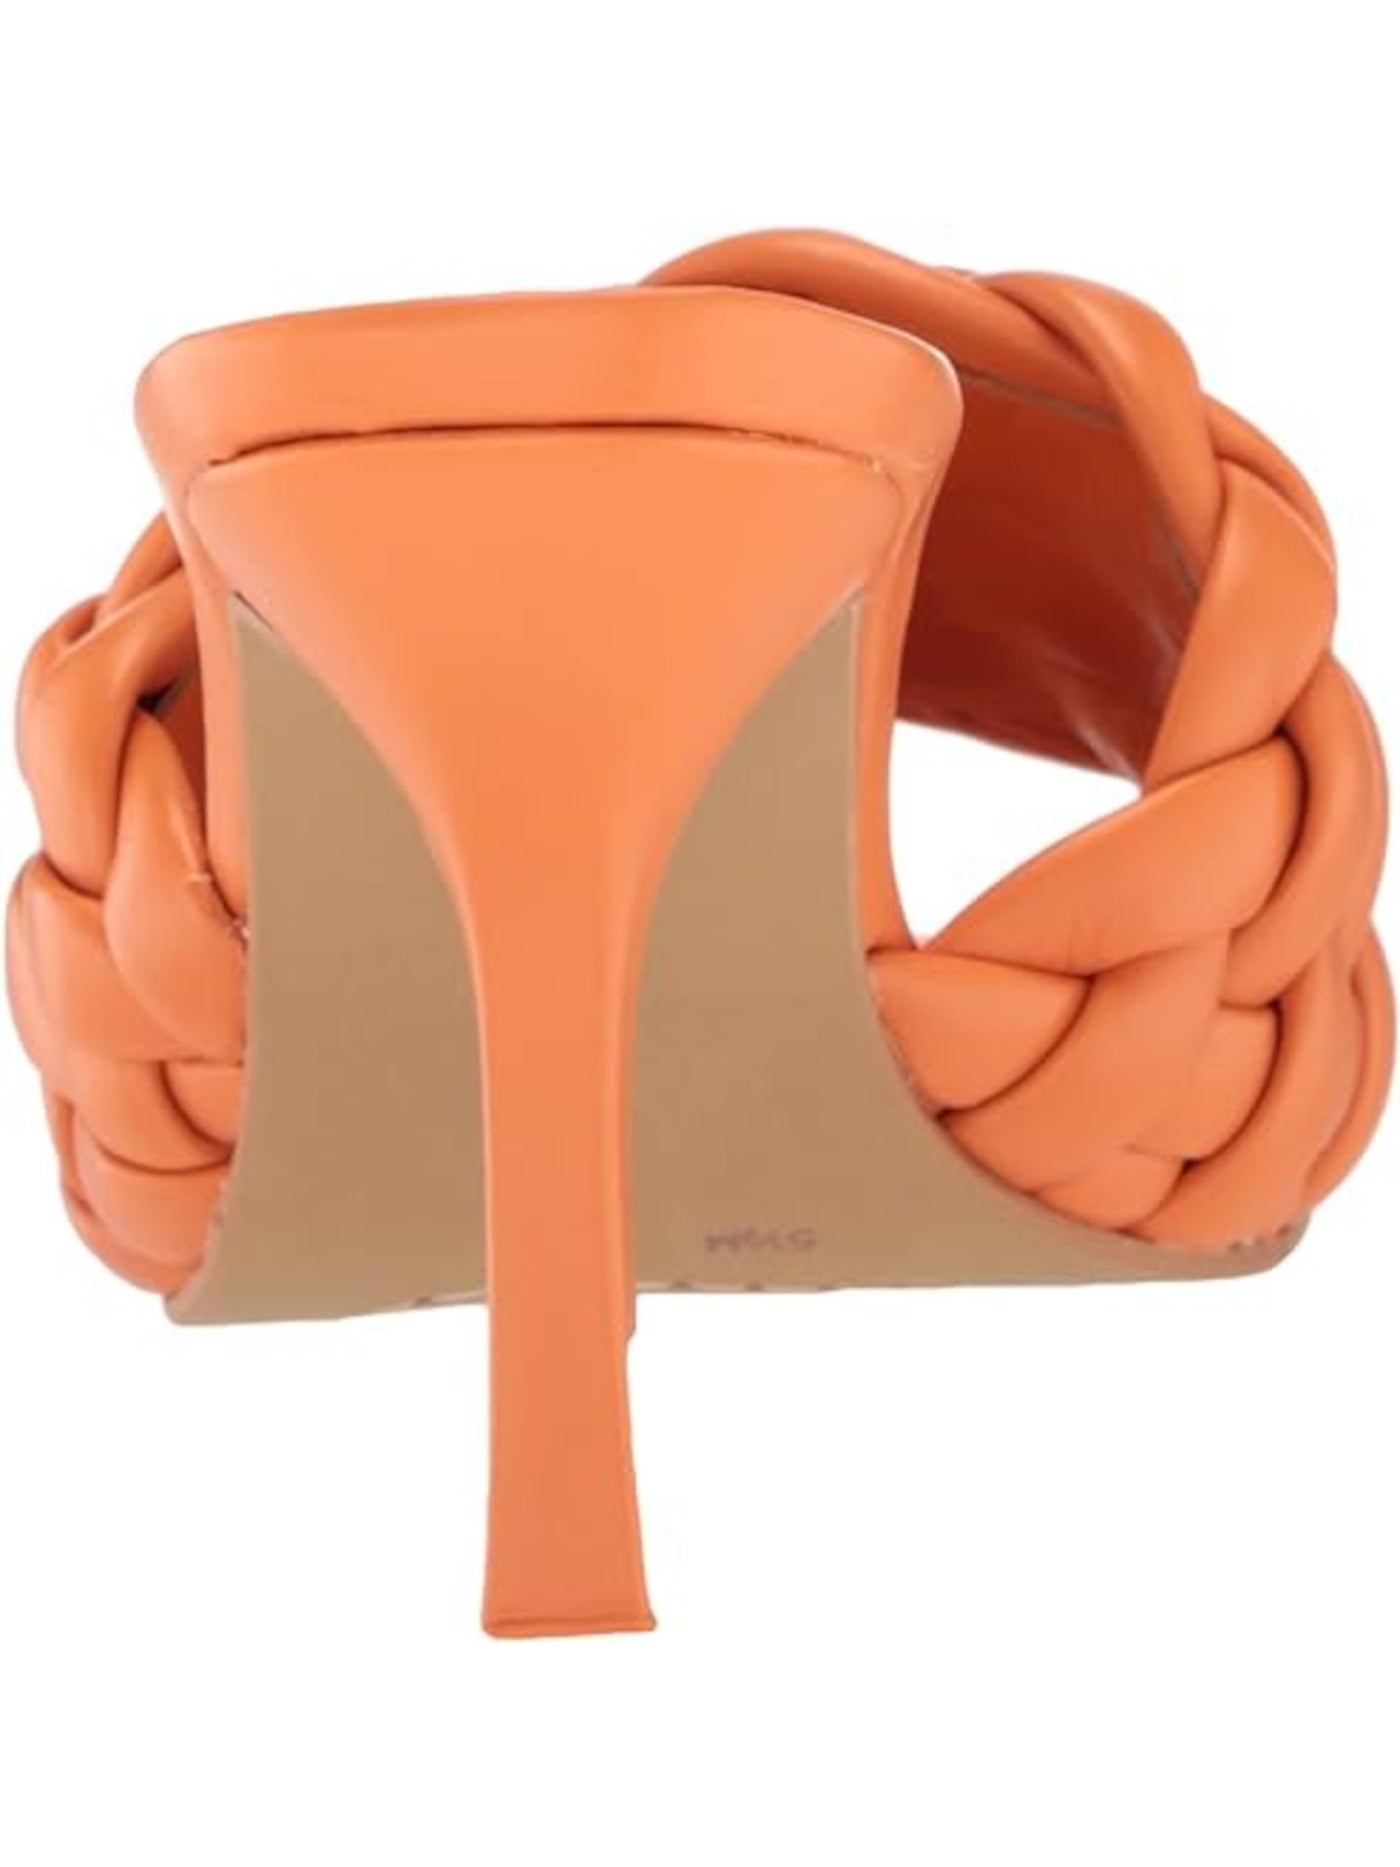 VINCE CAMUTO Womens Orange Woven Padded Brinela Square Toe Flare Slip On Leather Heeled Sandal 7 M